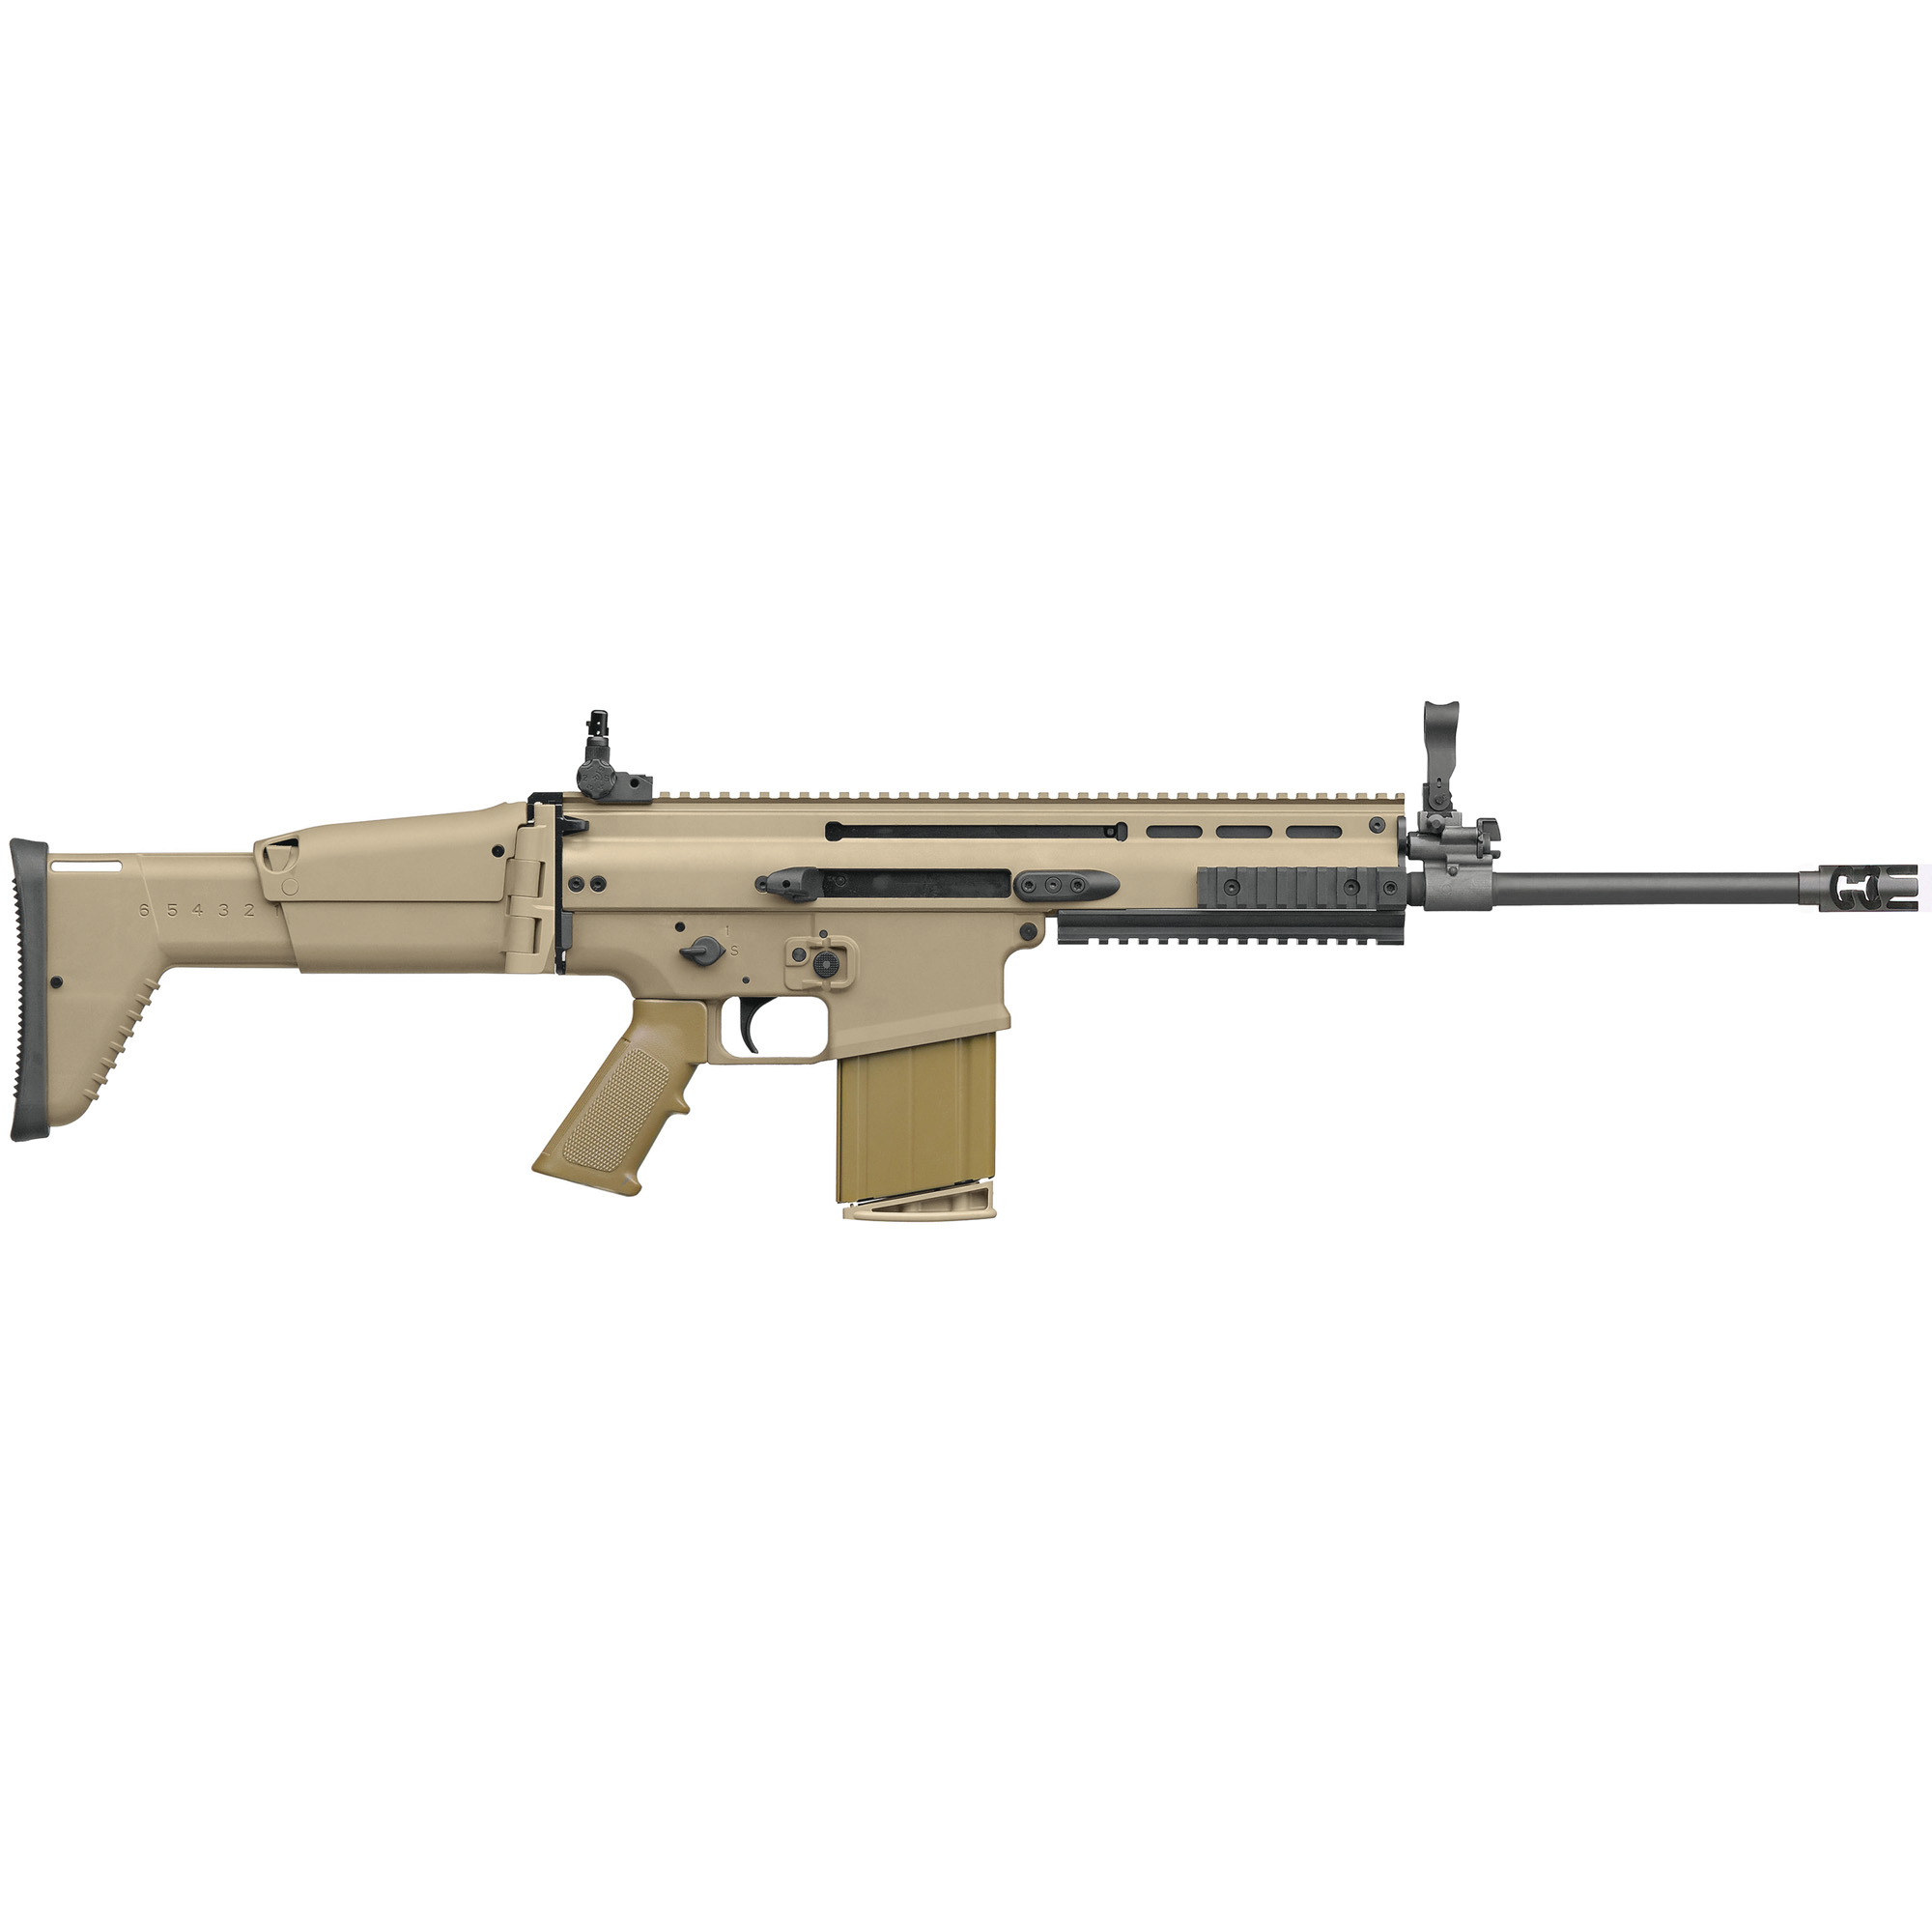 https://cityarsenal.com/product/fn-scar-17s-7-62x51mm-rifle-with-nrch-fde-98541-2/